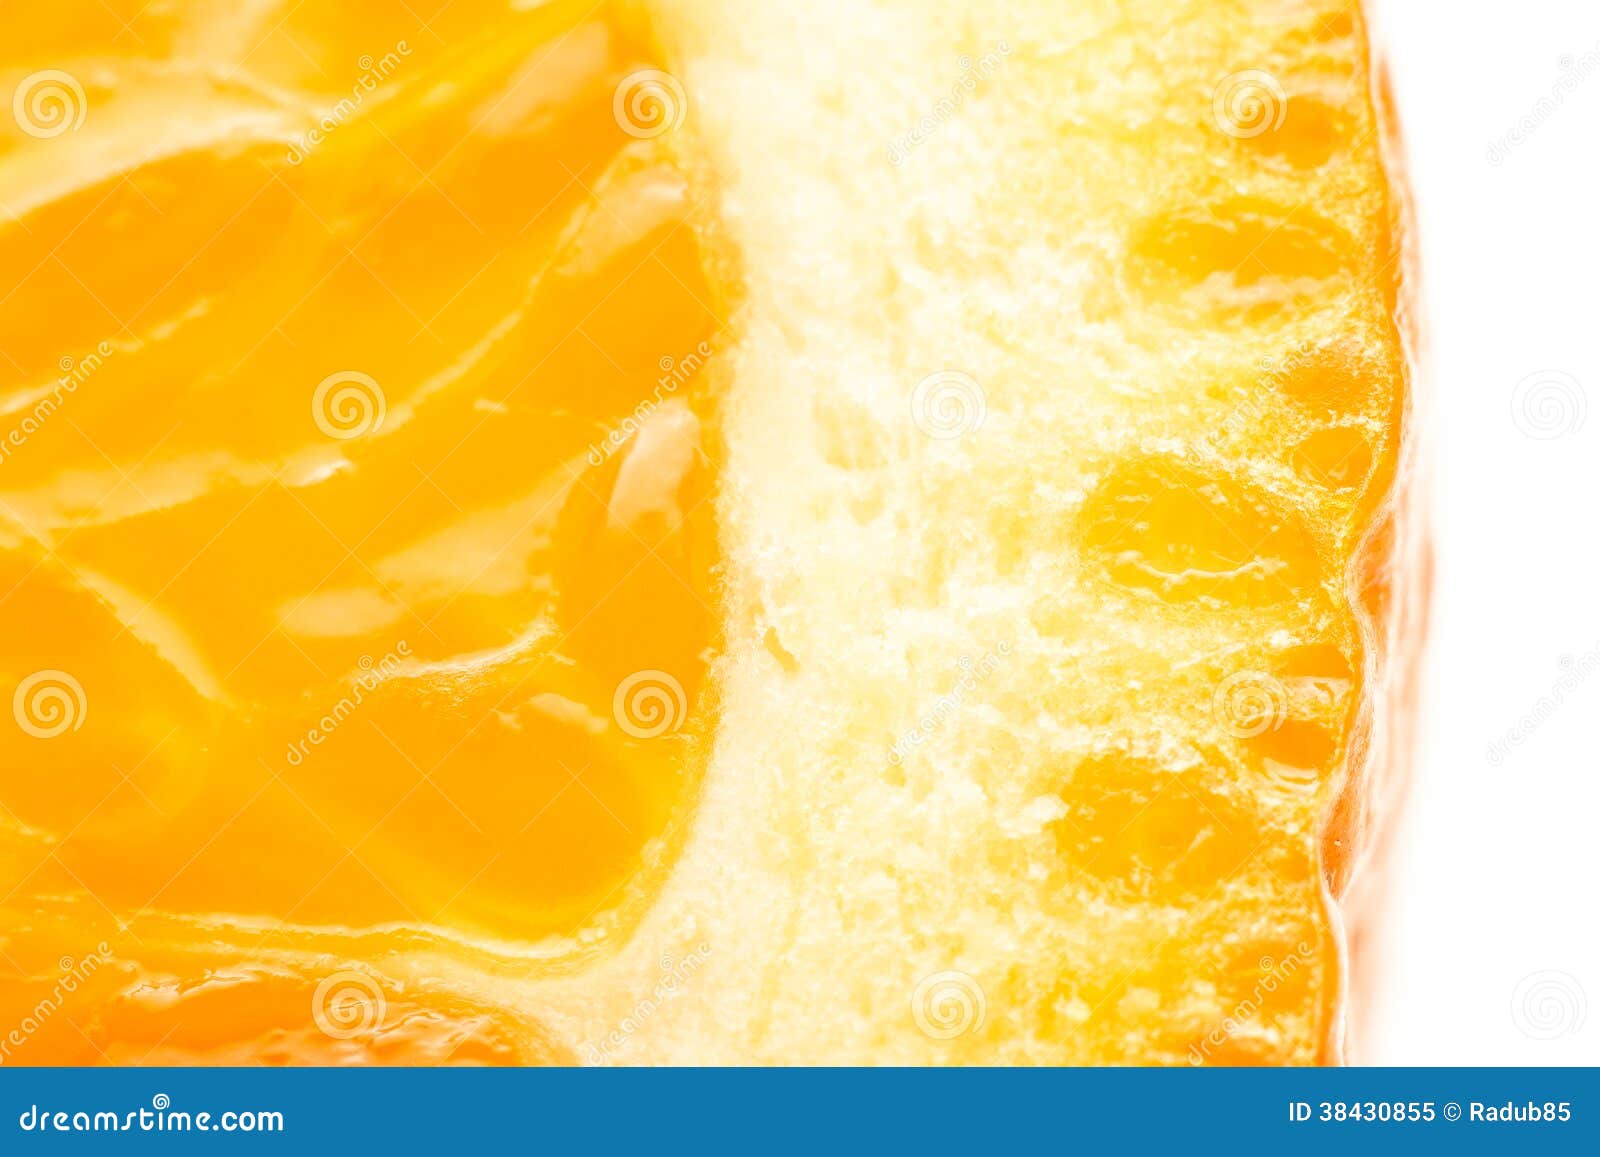 Orange Slice Peel Isolated Stock Image Image Of Healthy 38430855